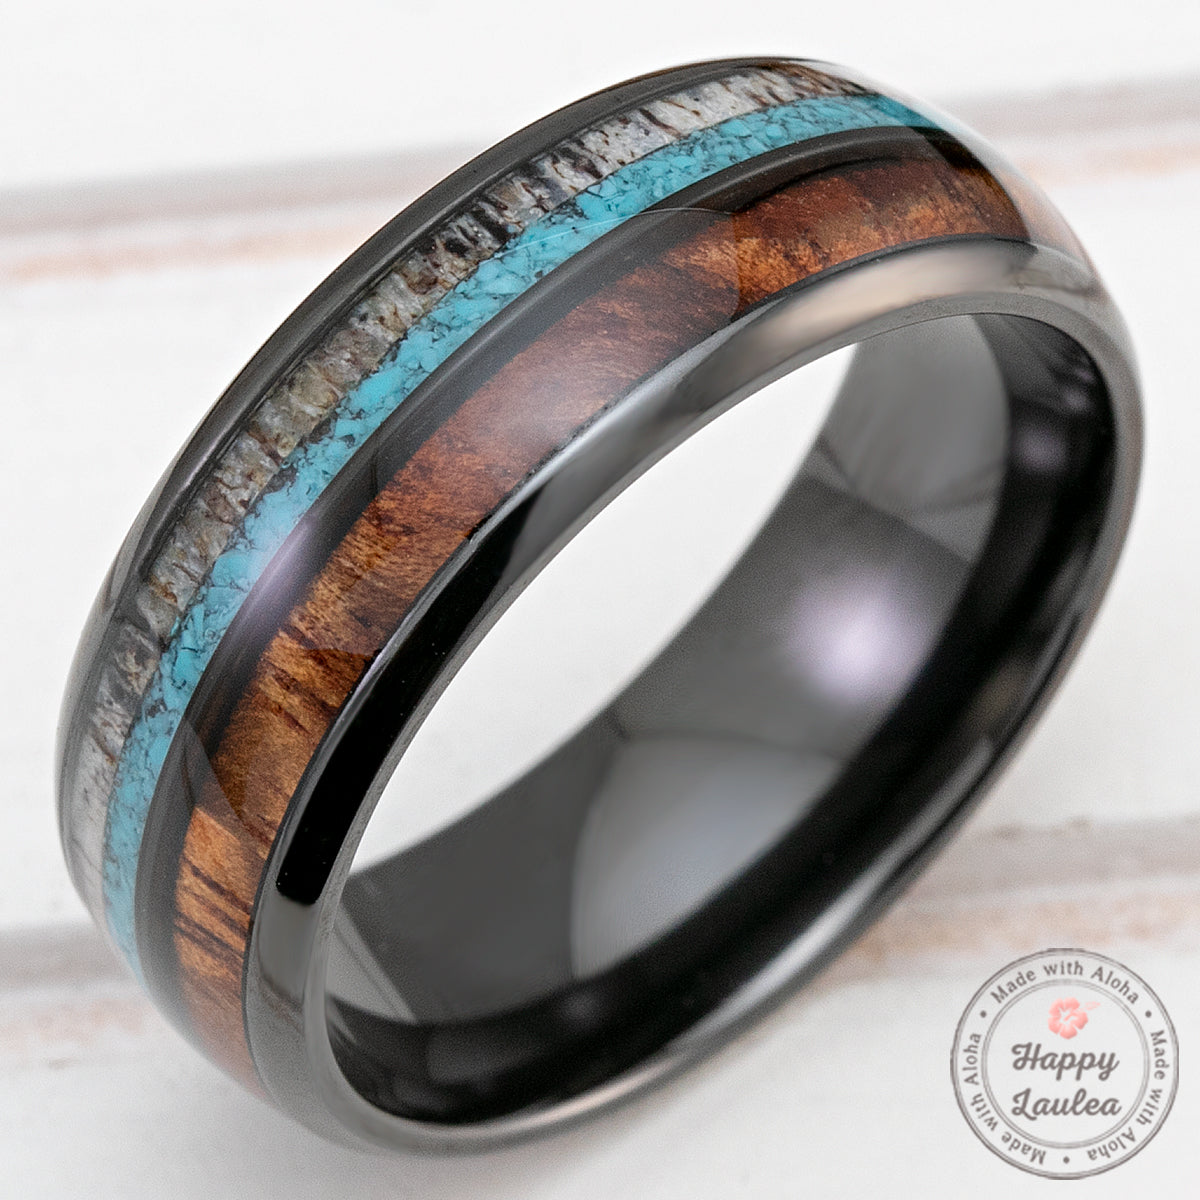 Black Zirconium 8mm Ring with Antler, Turquoise & Hawaiian Koa Wood Tri-Inlay - Dome Shape, Comfort Fitment